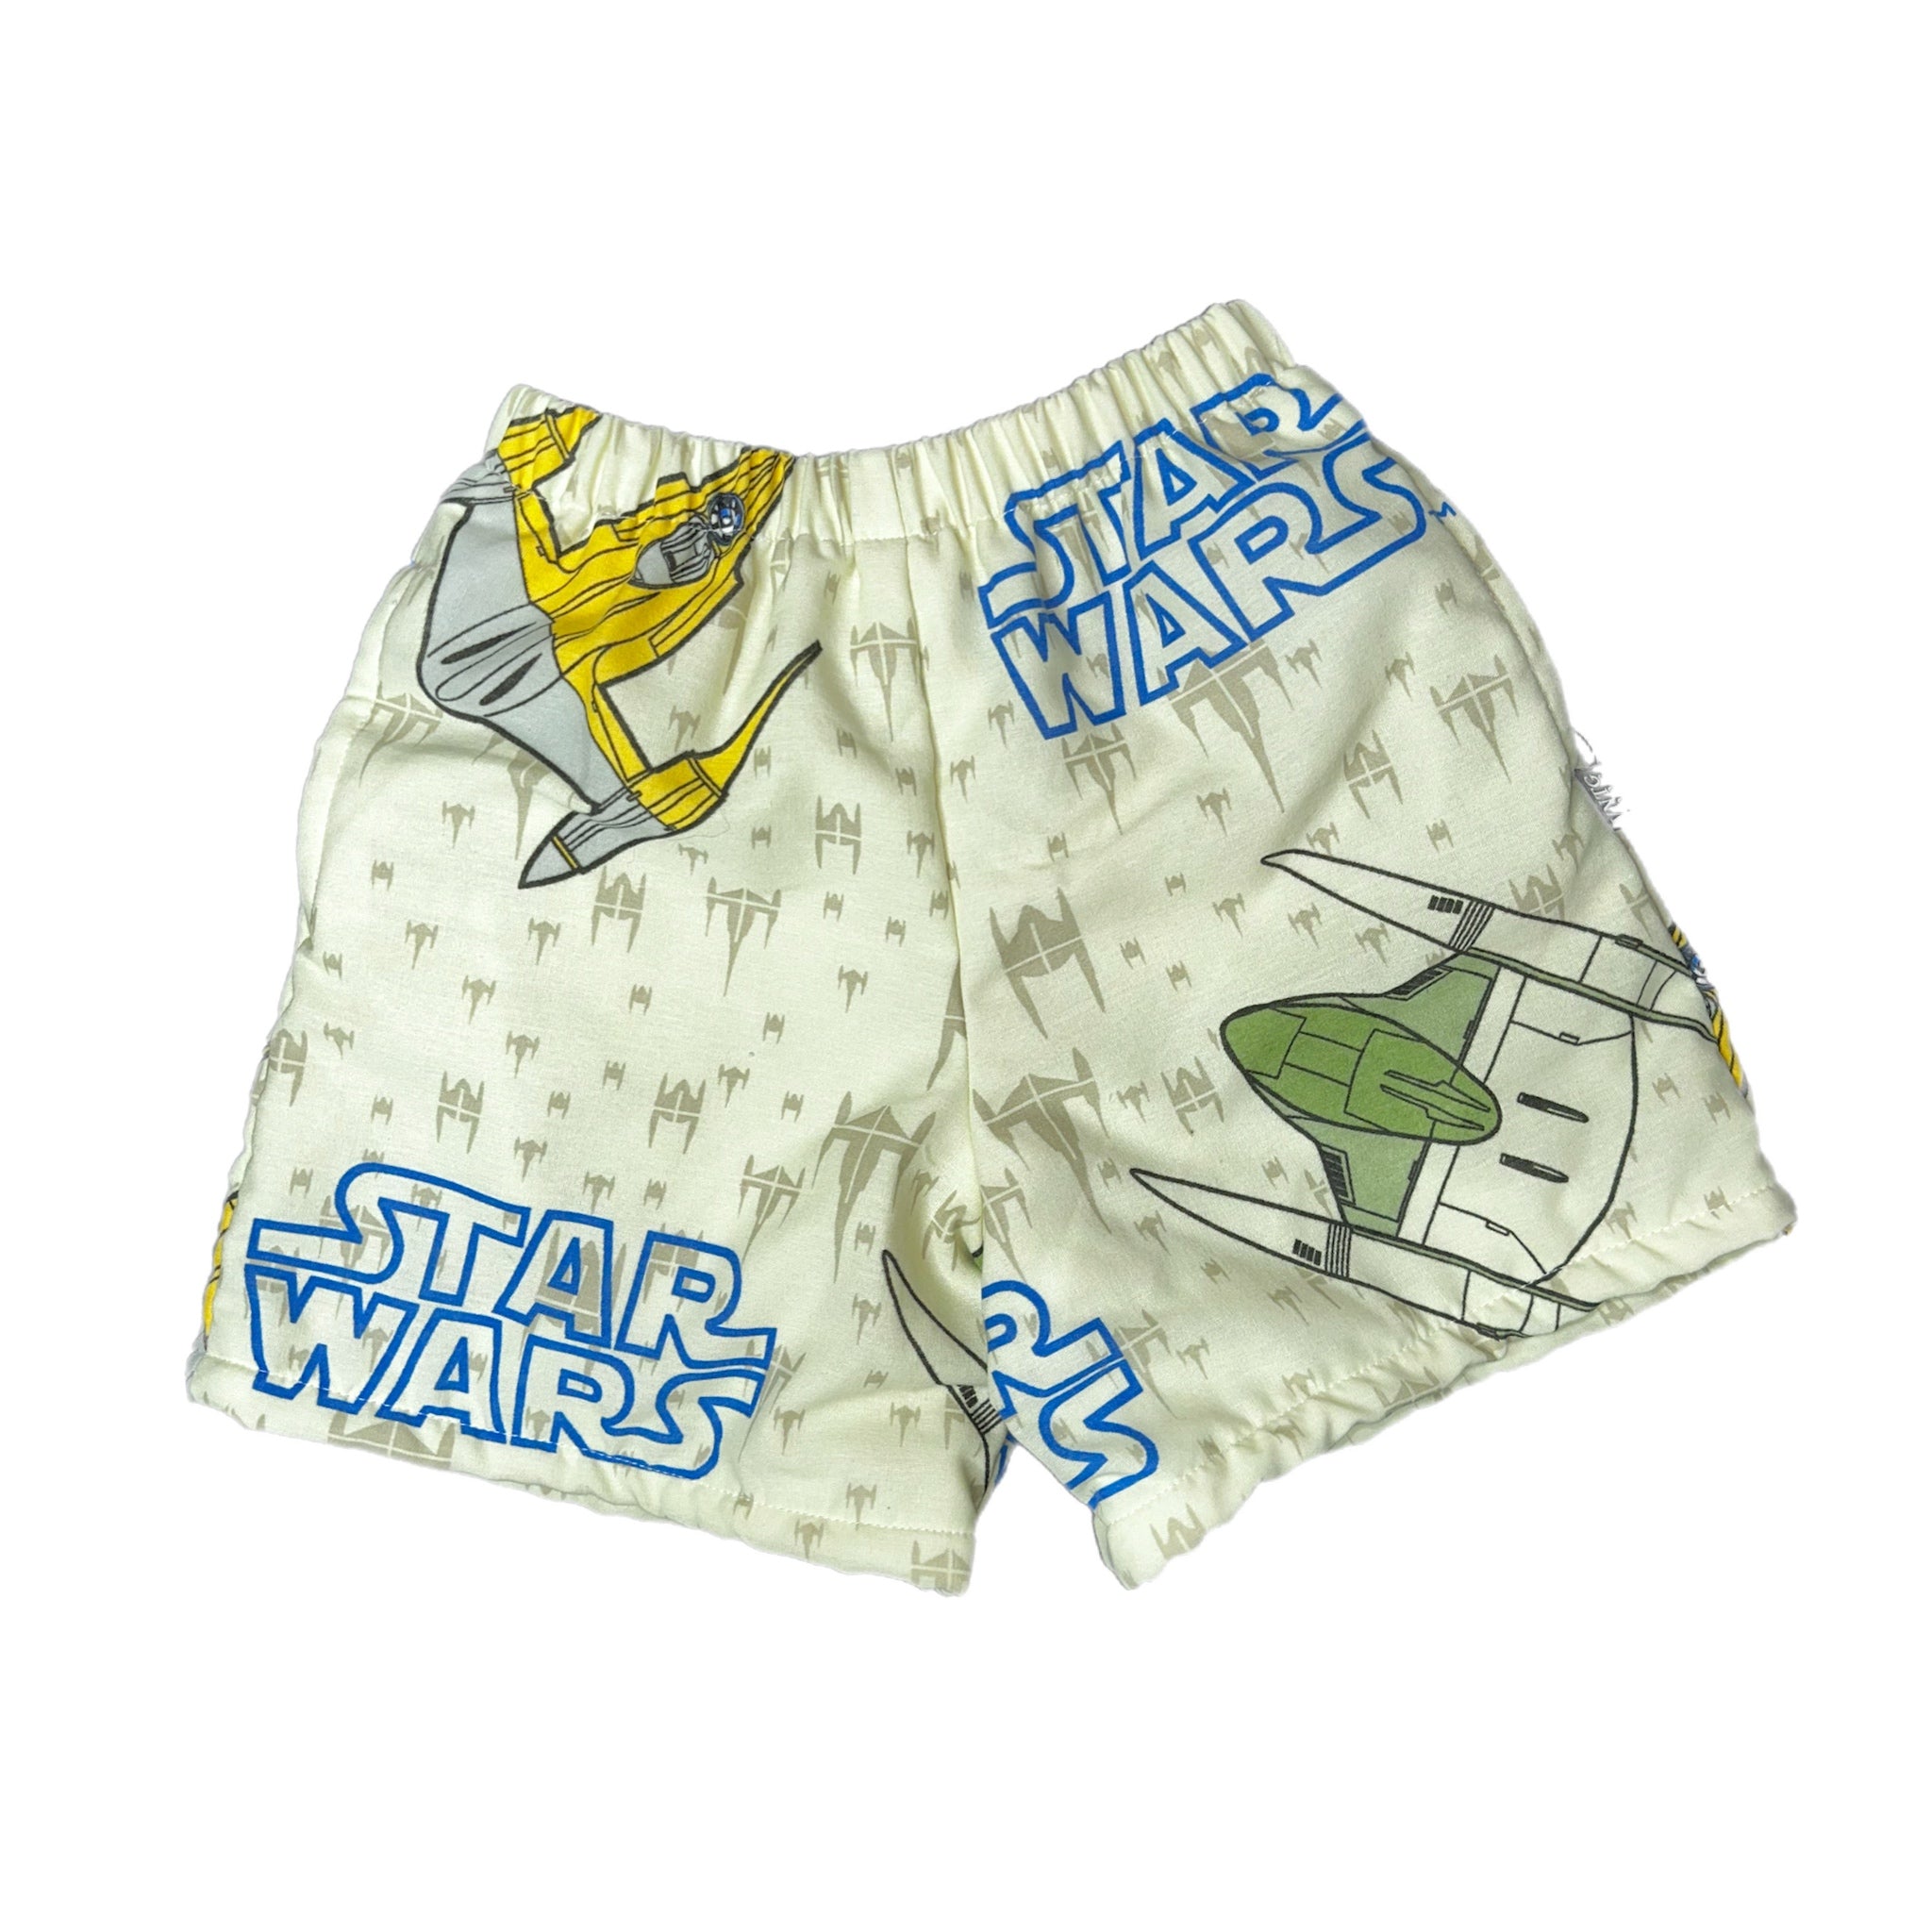 5T Star Wars Shorts